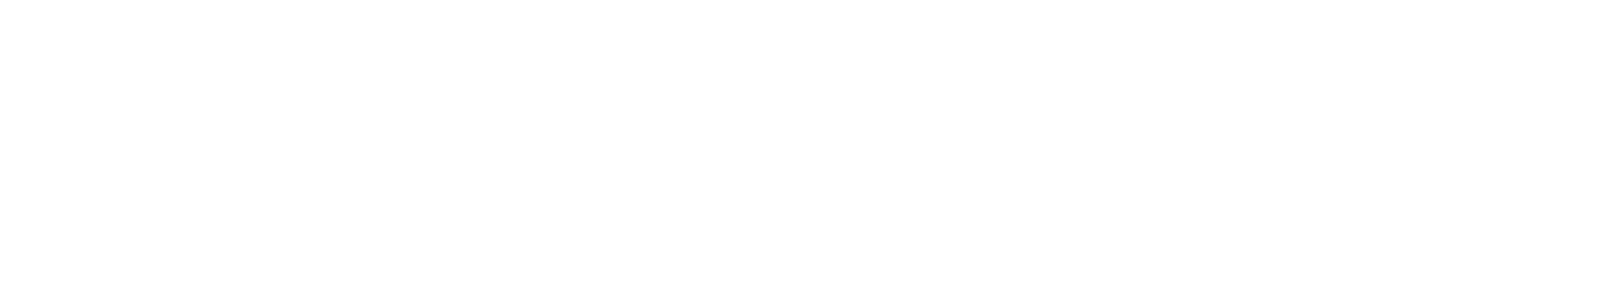 Dynatrace Logo groß für dunkle Hintergründe (transparentes PNG)